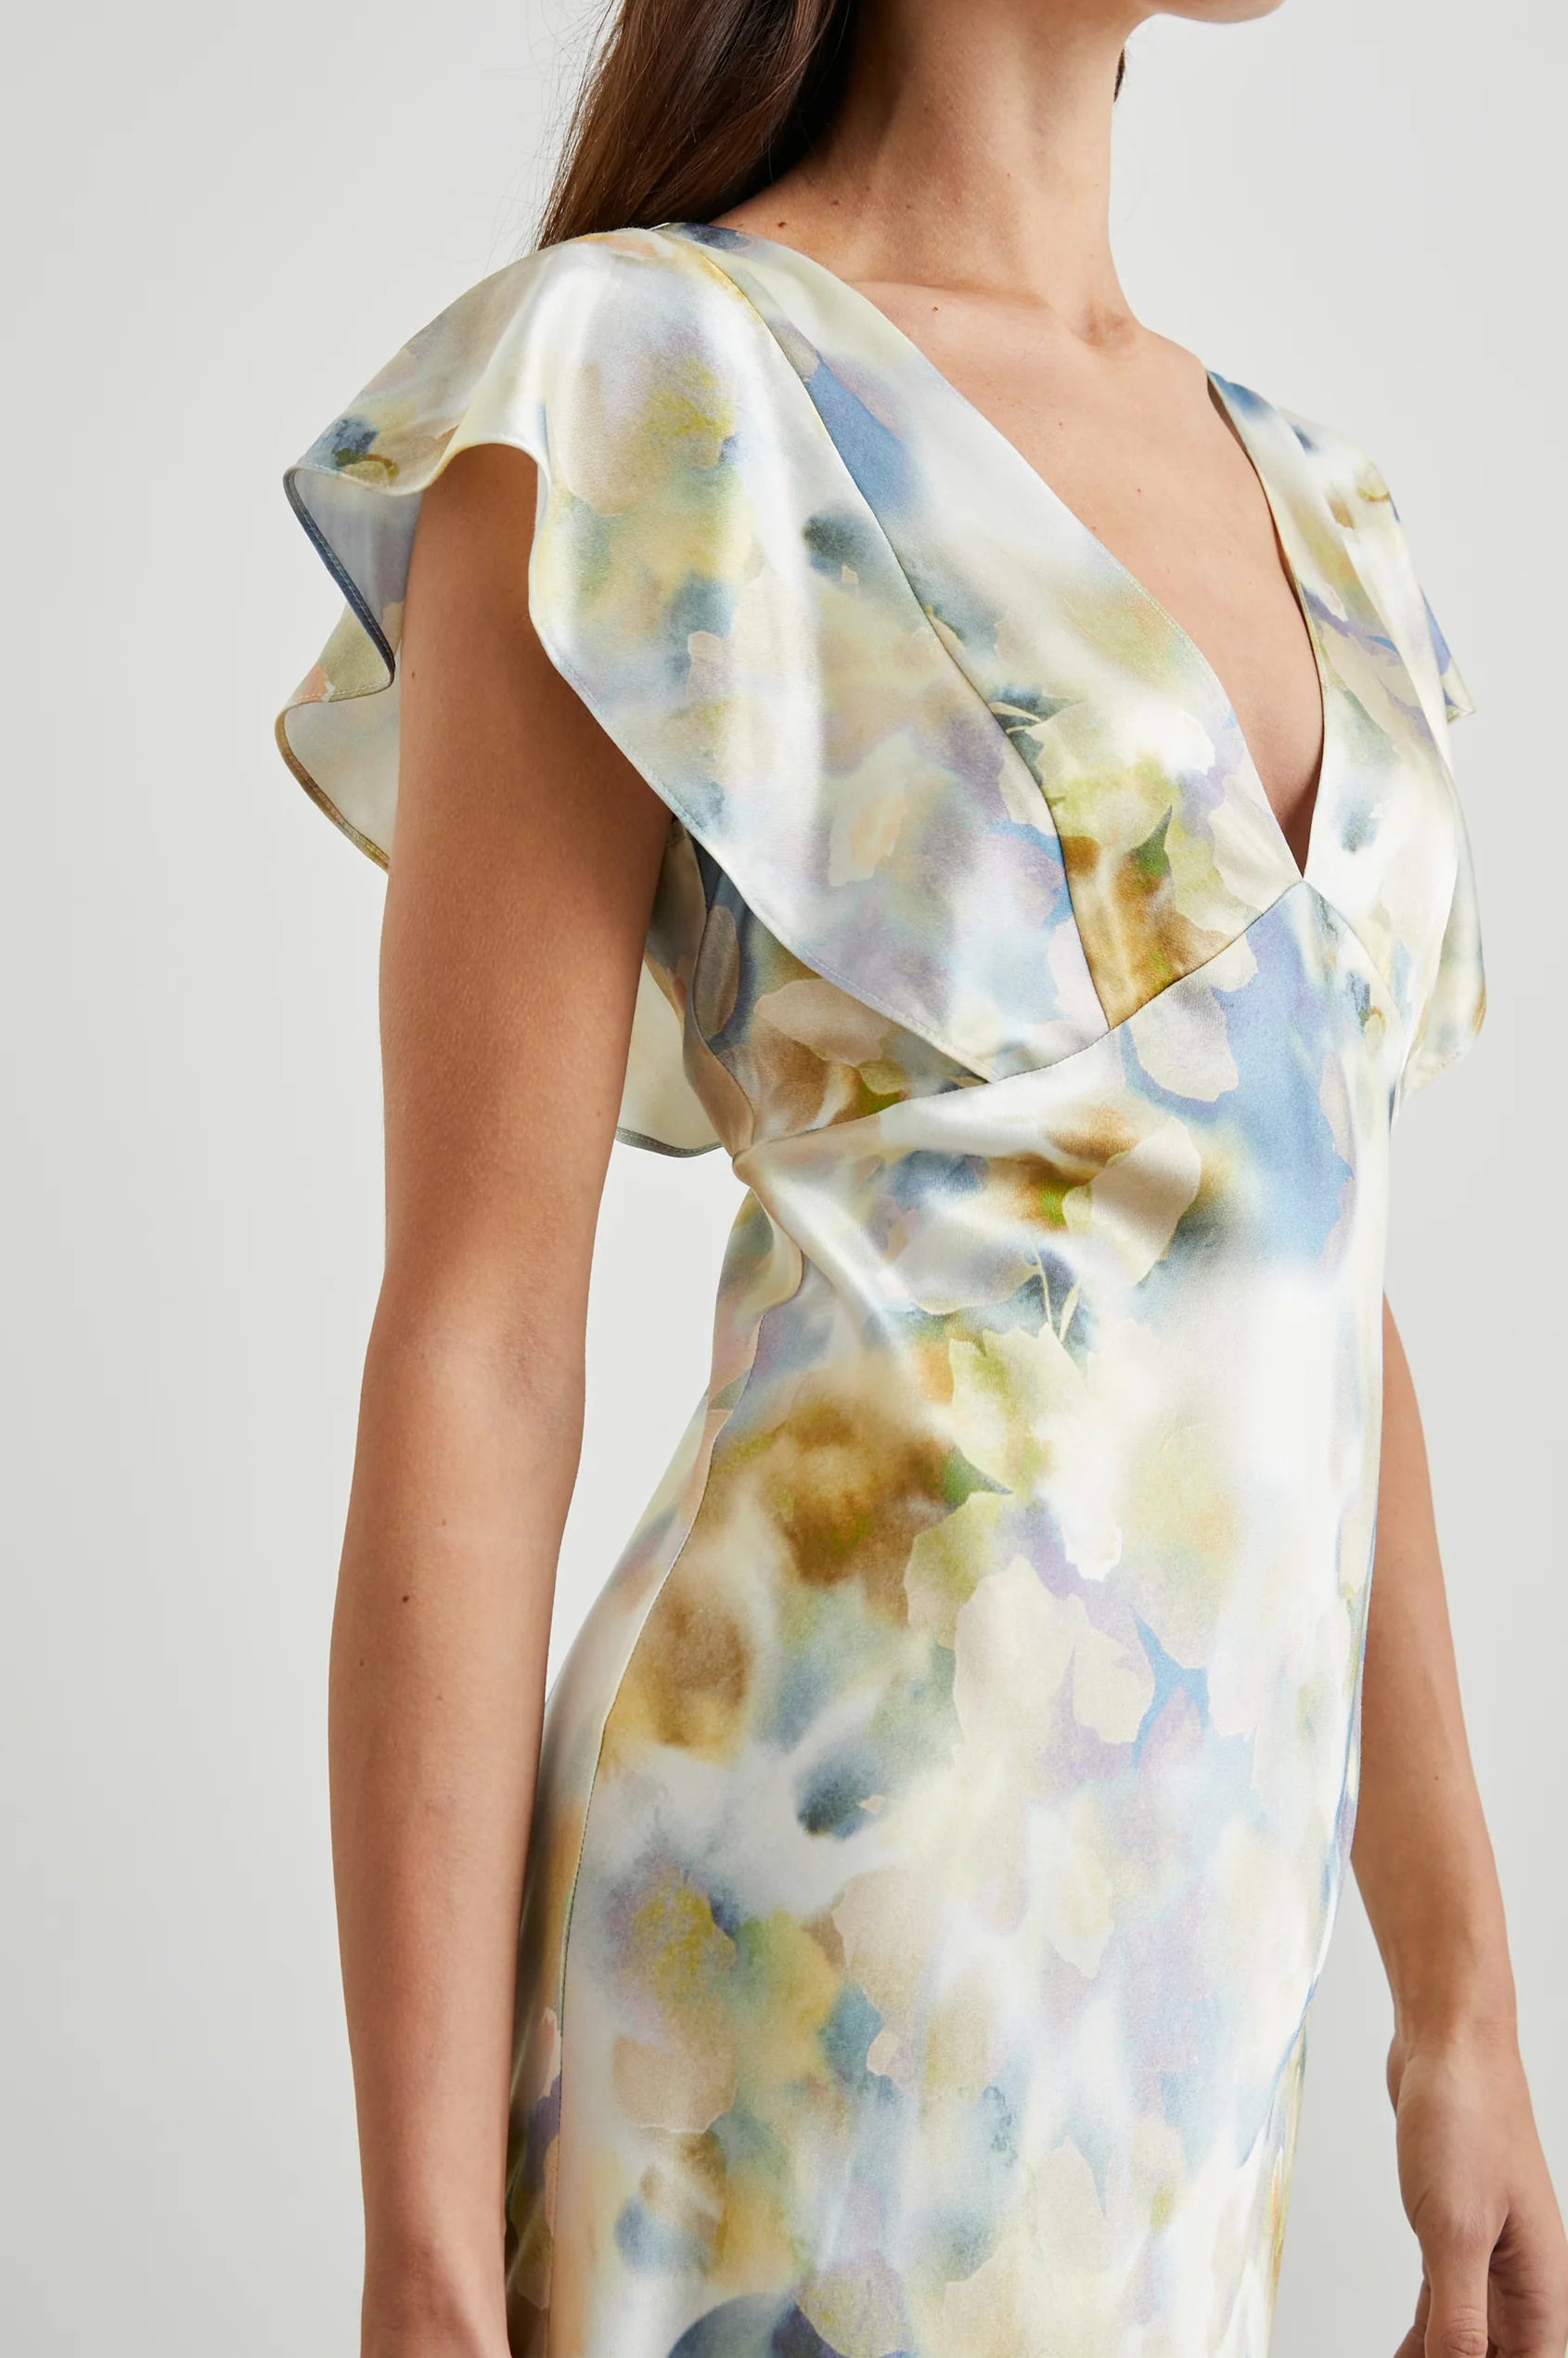 Rails - Dina Dress / Diffused Blossom